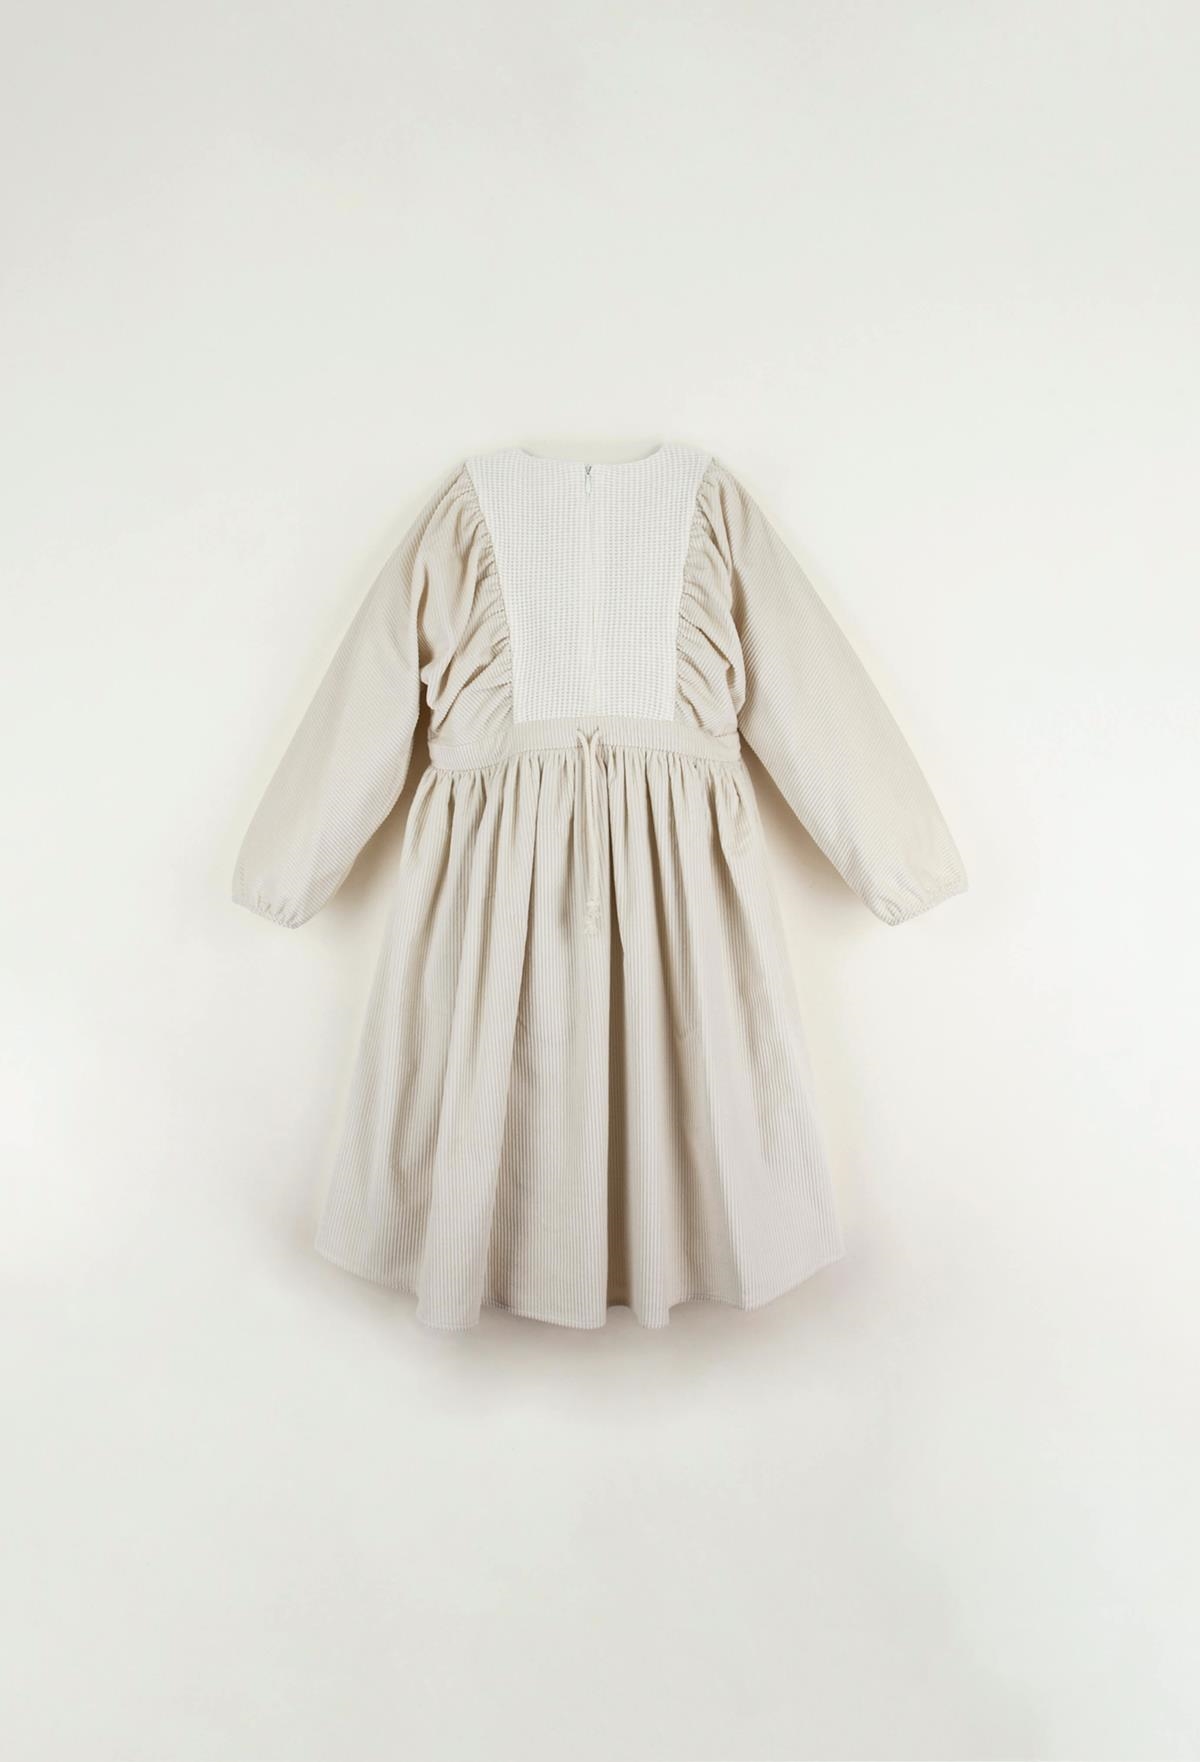 Mod.30.1 Off-white dress with yoke | AW22.23 Mod.30.1 Off-white dress with yoke